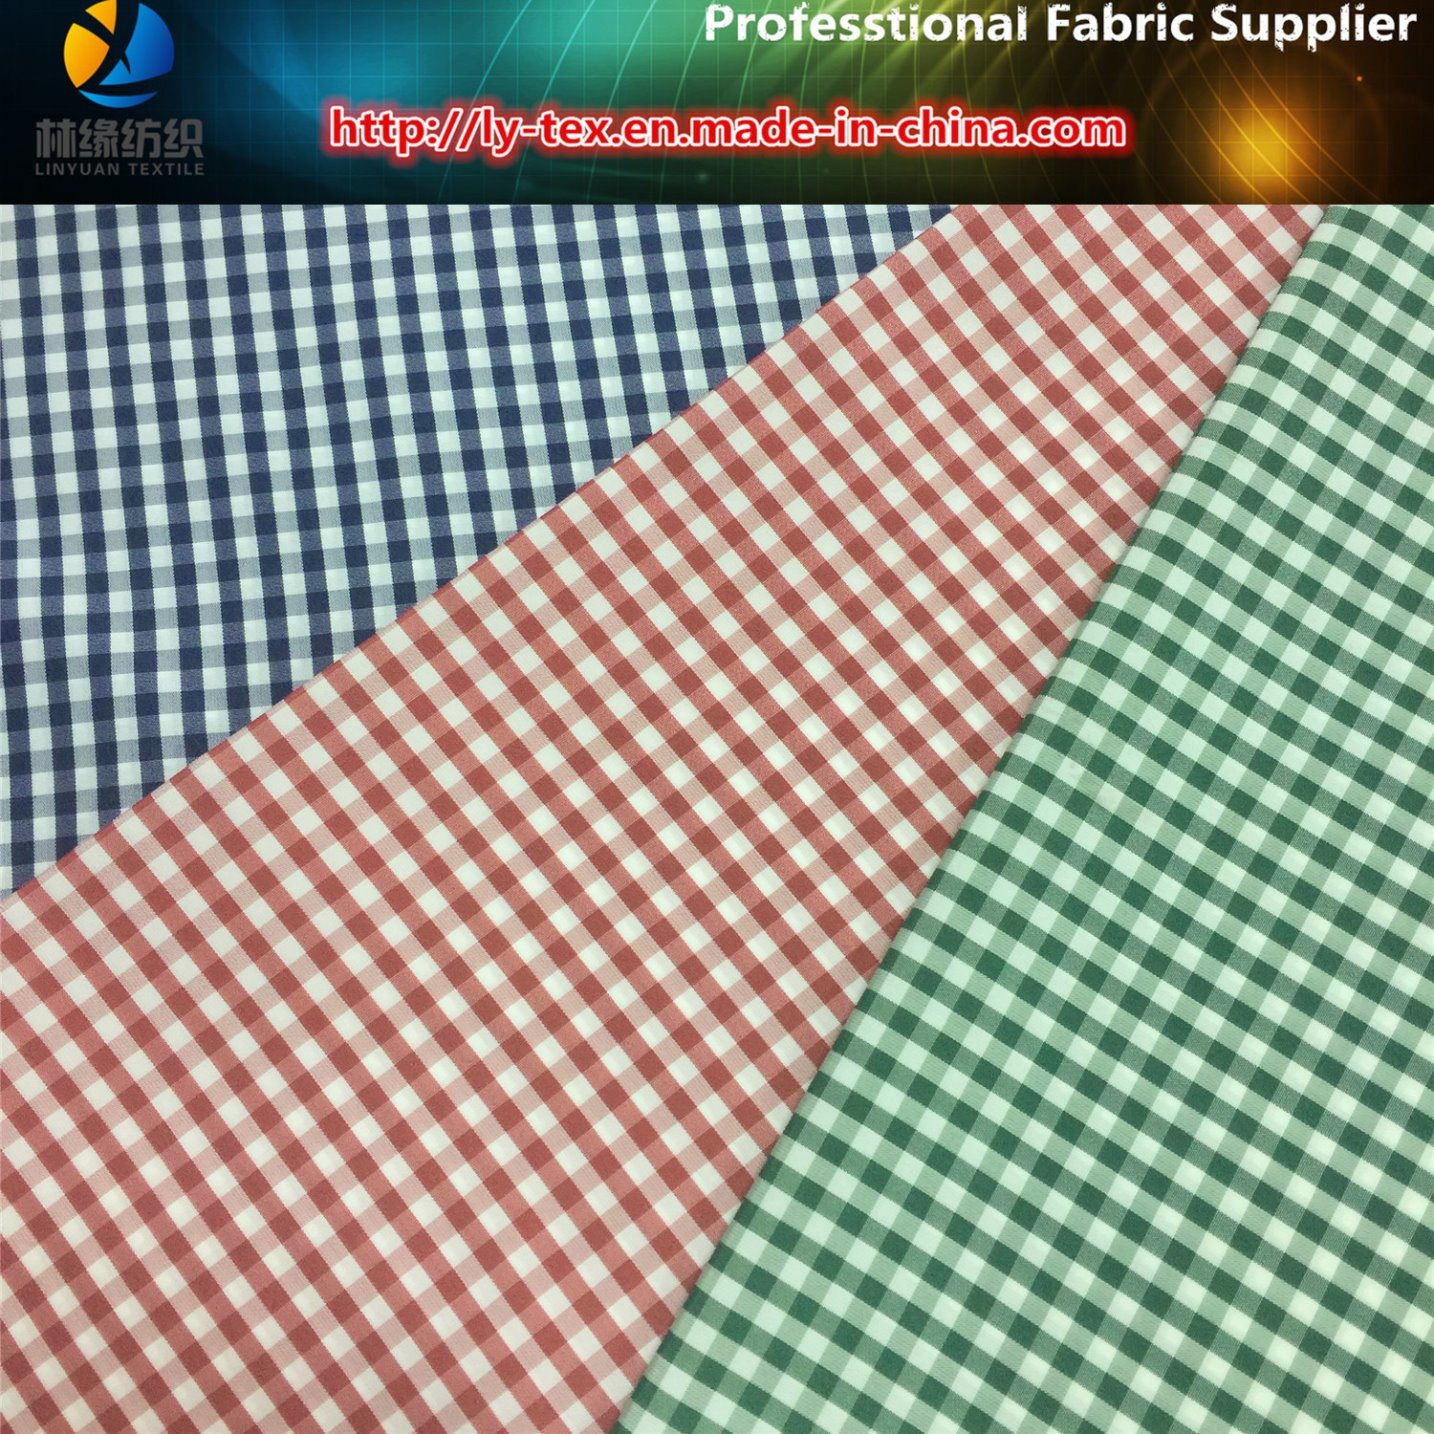 Polyester Taffeta Yarn Dyed Fabric, Vichy Check, Green/White Check